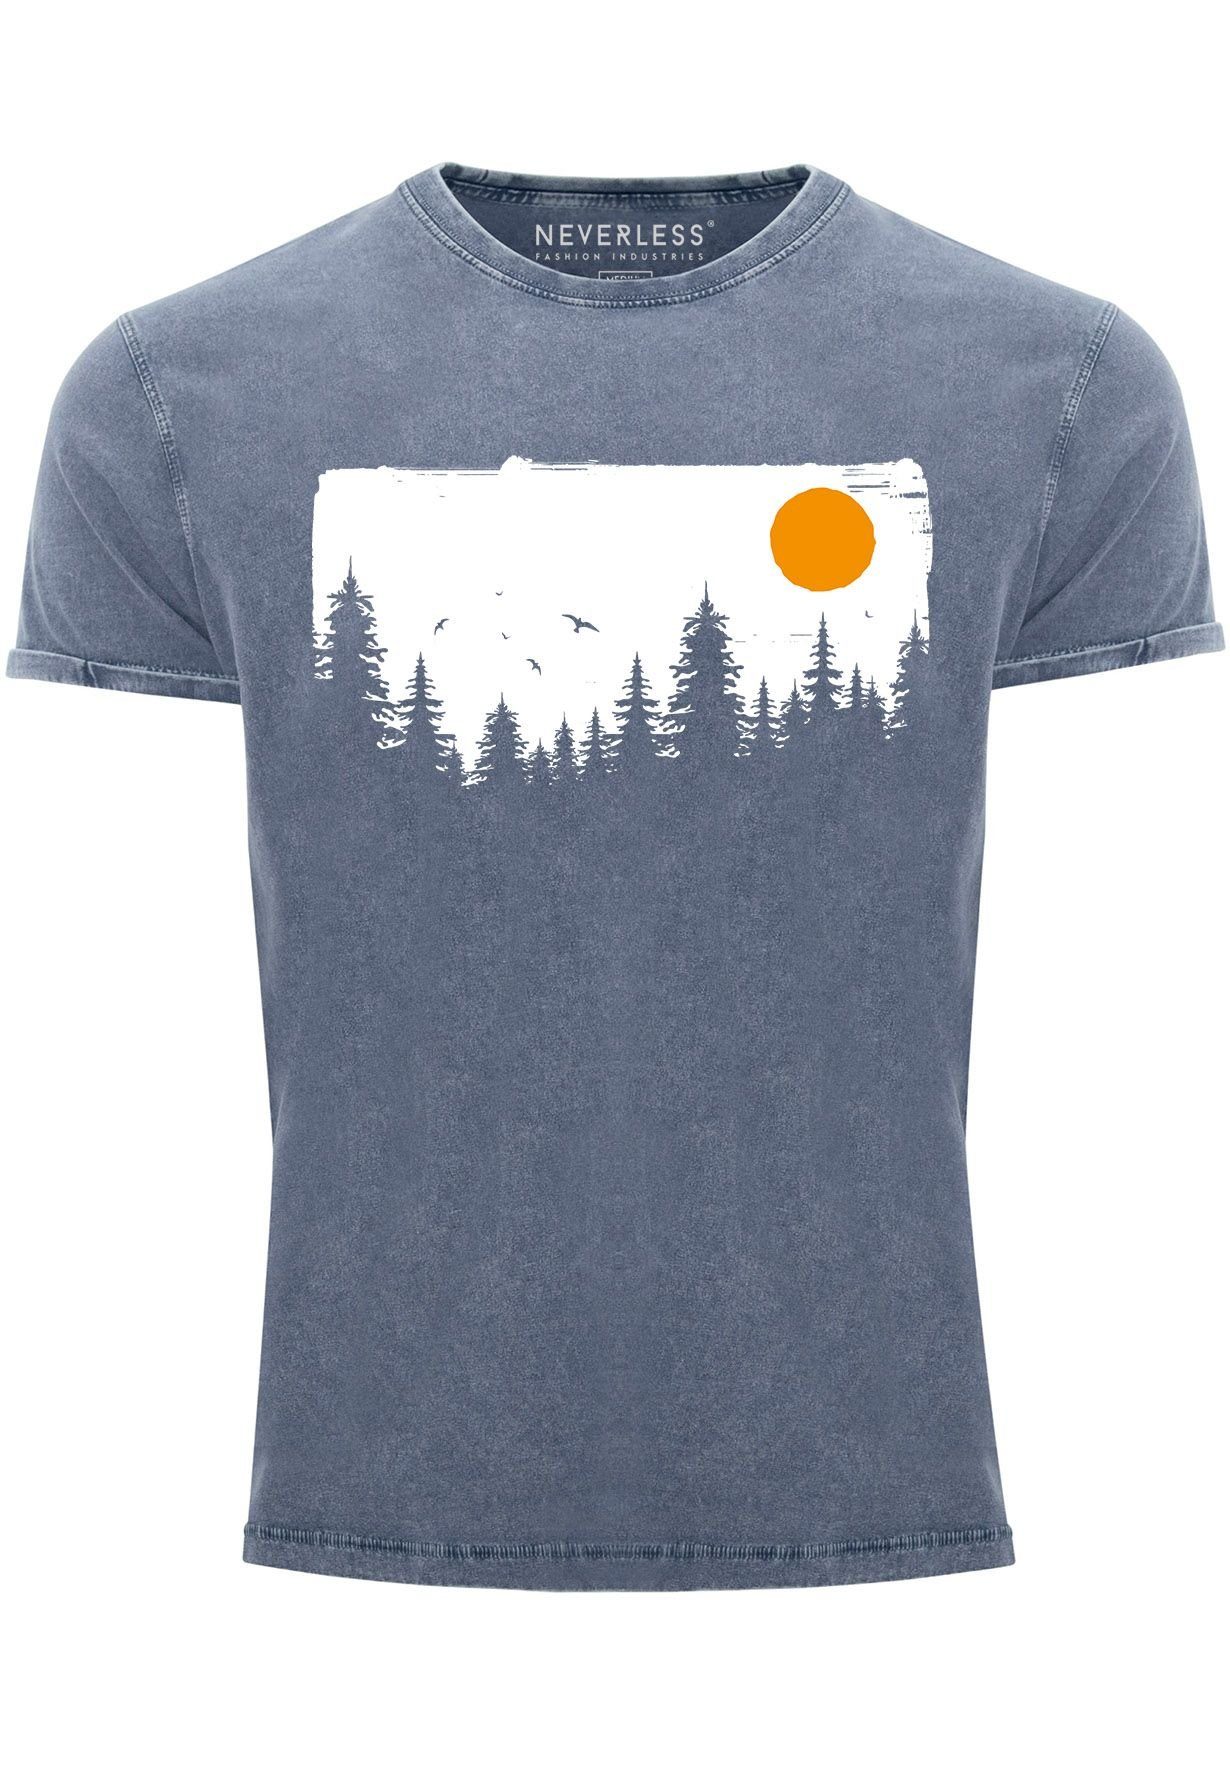 Neverless Print-Shirt Herren Vintage Shirt Wald Bäume Outdoor Adventure Abenteuer Natur-Lieb mit Print blau | T-Shirts